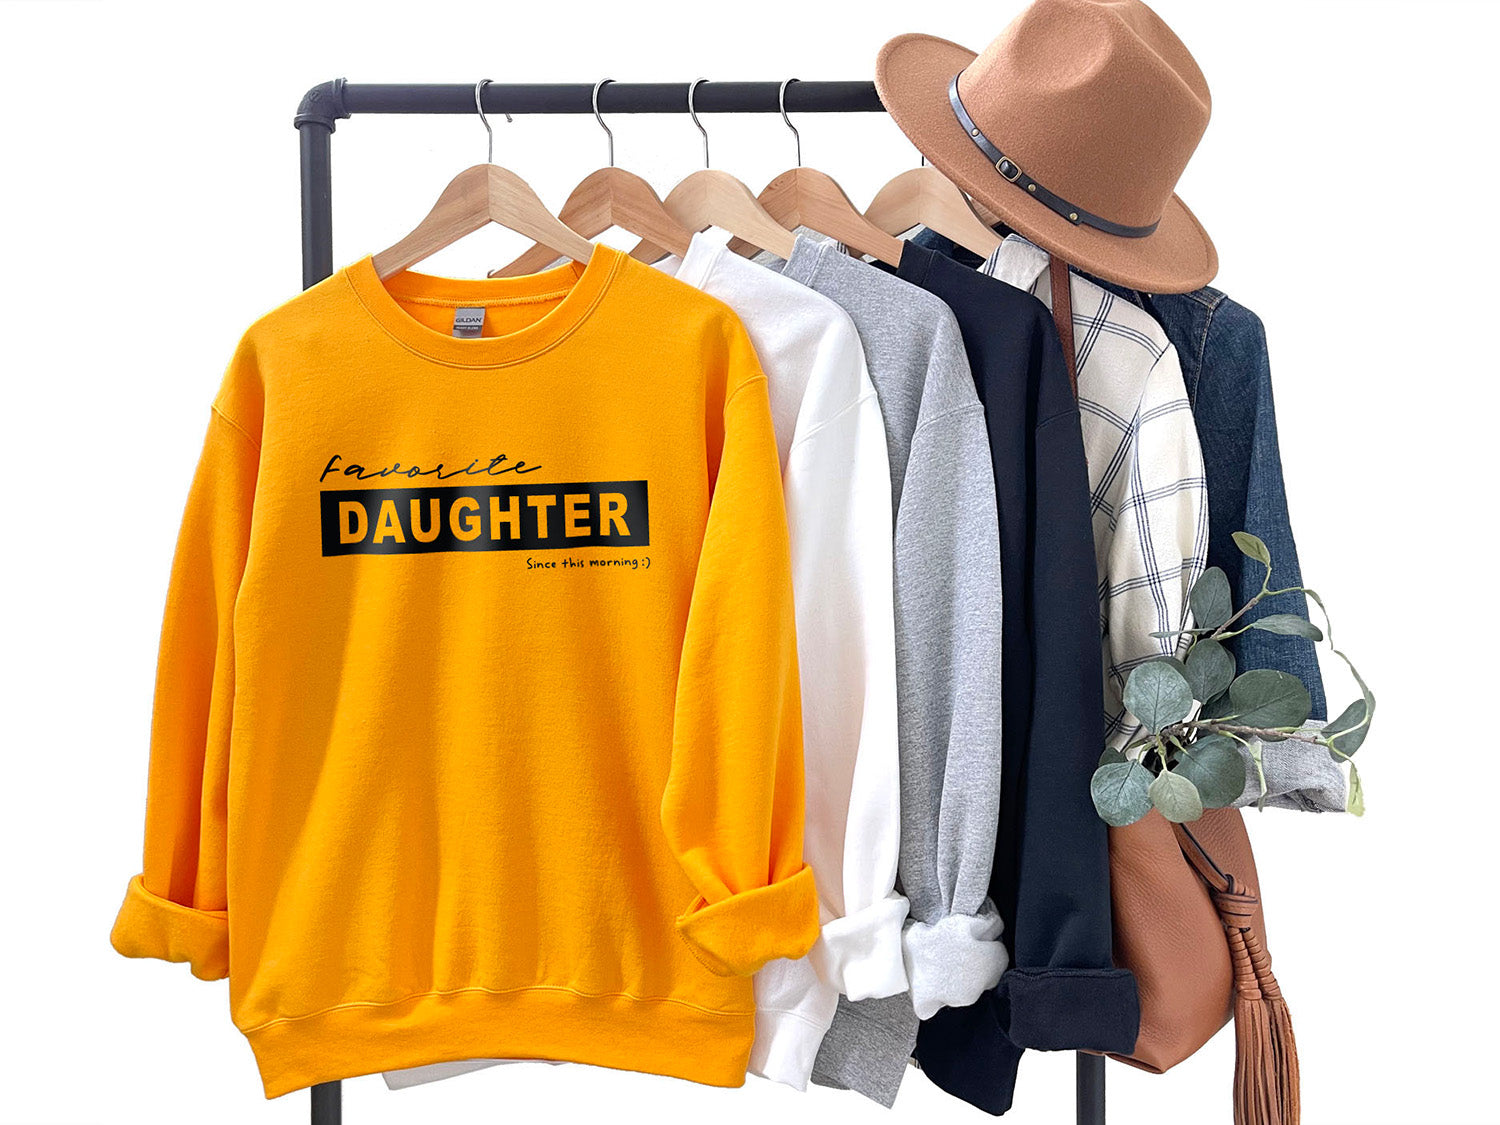 Favorite Daughter Since This Morning Sweatshirt - Funny Daughter Design Printed Sweatshirt